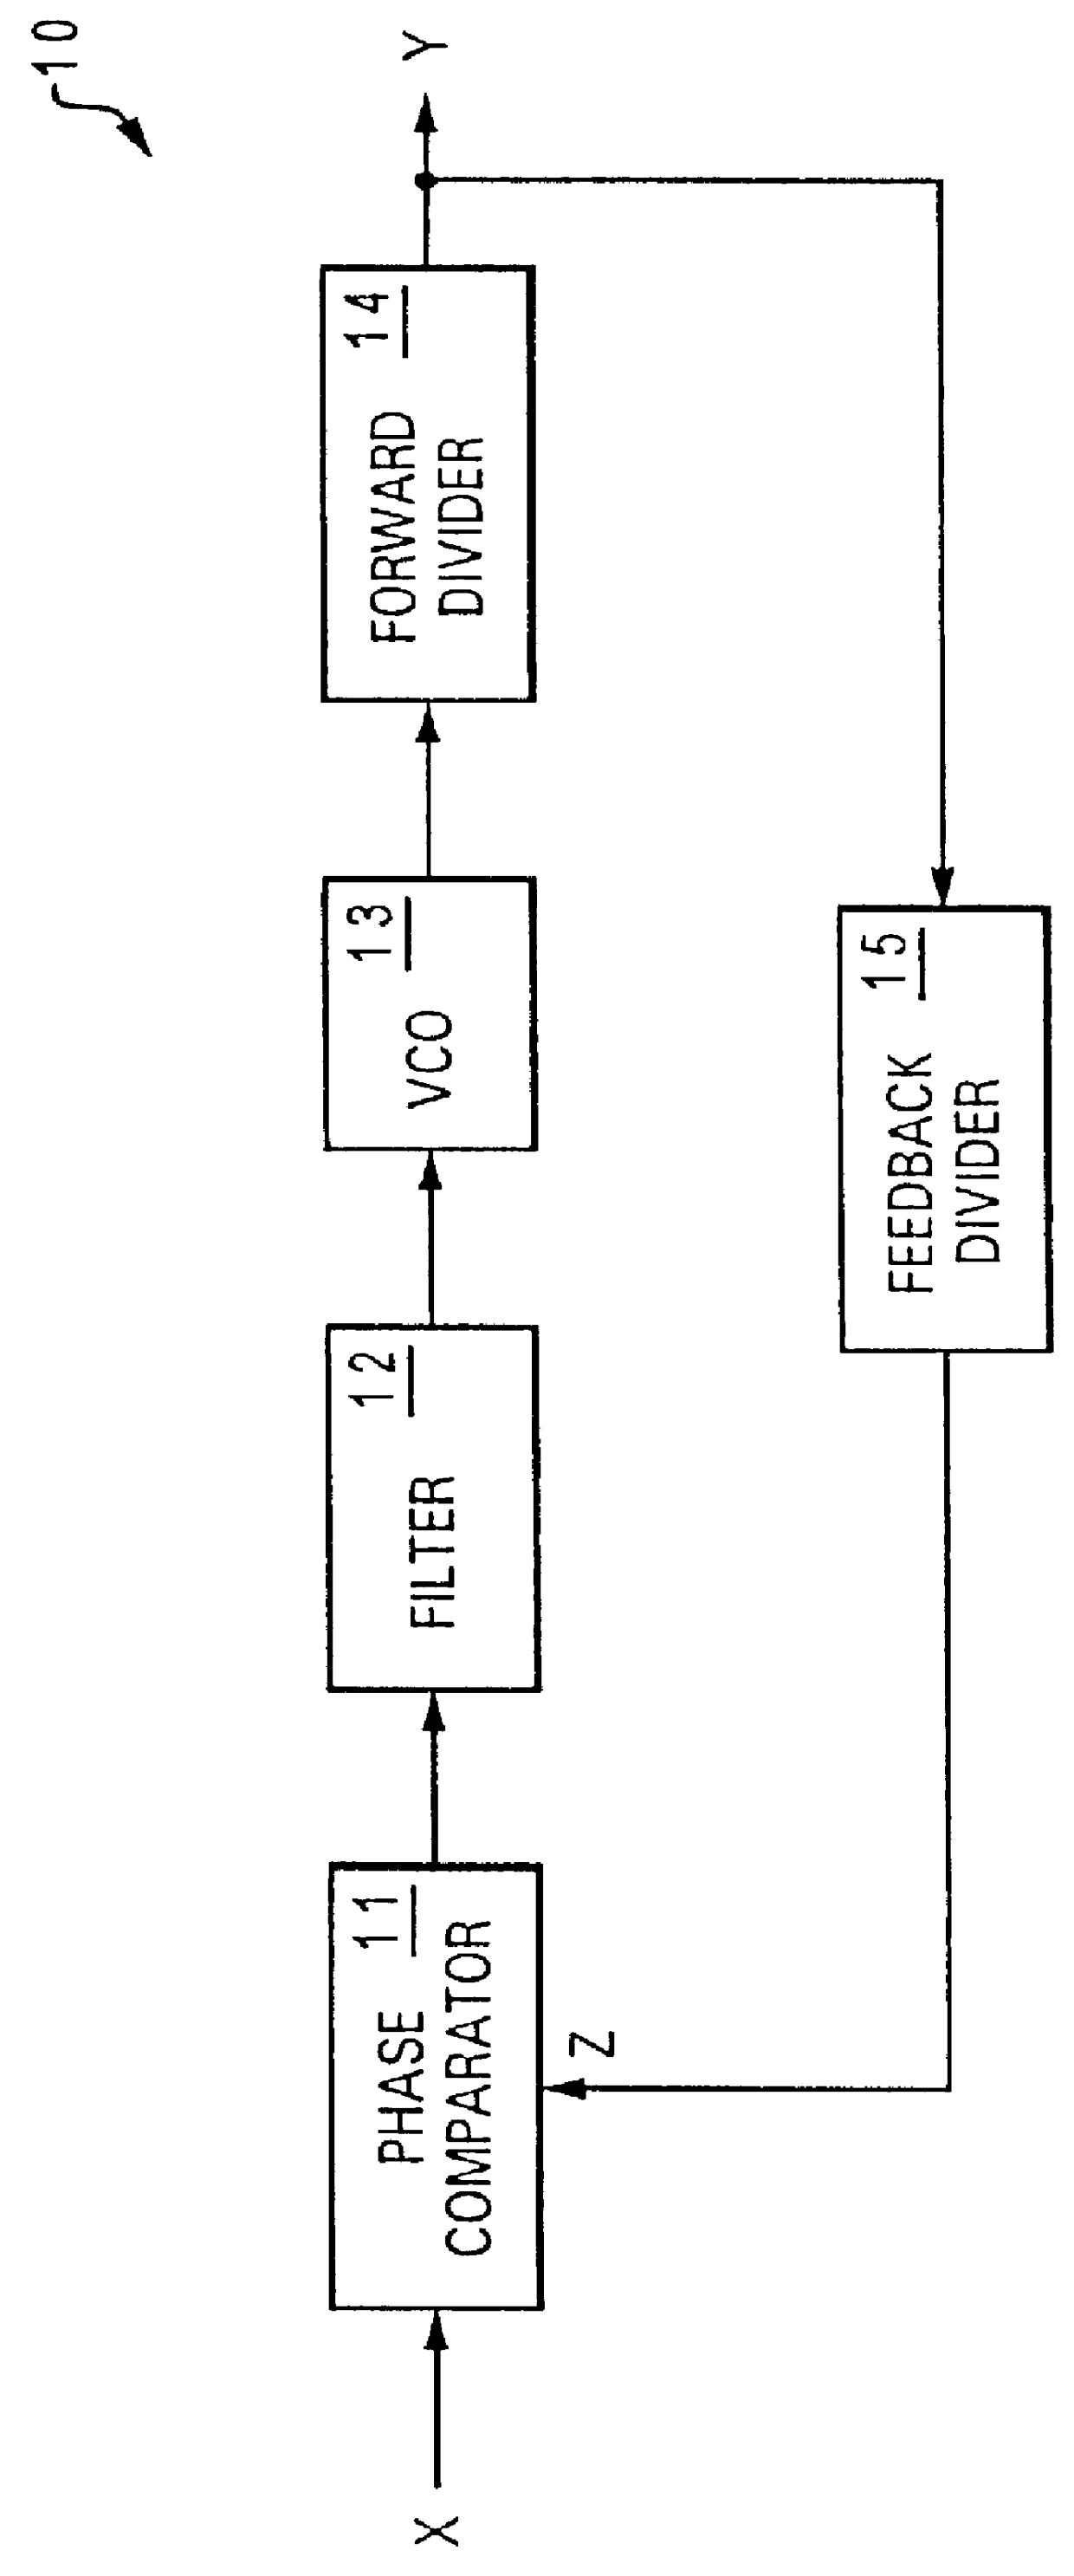 Phase-locked loop circuit with dynamic backup